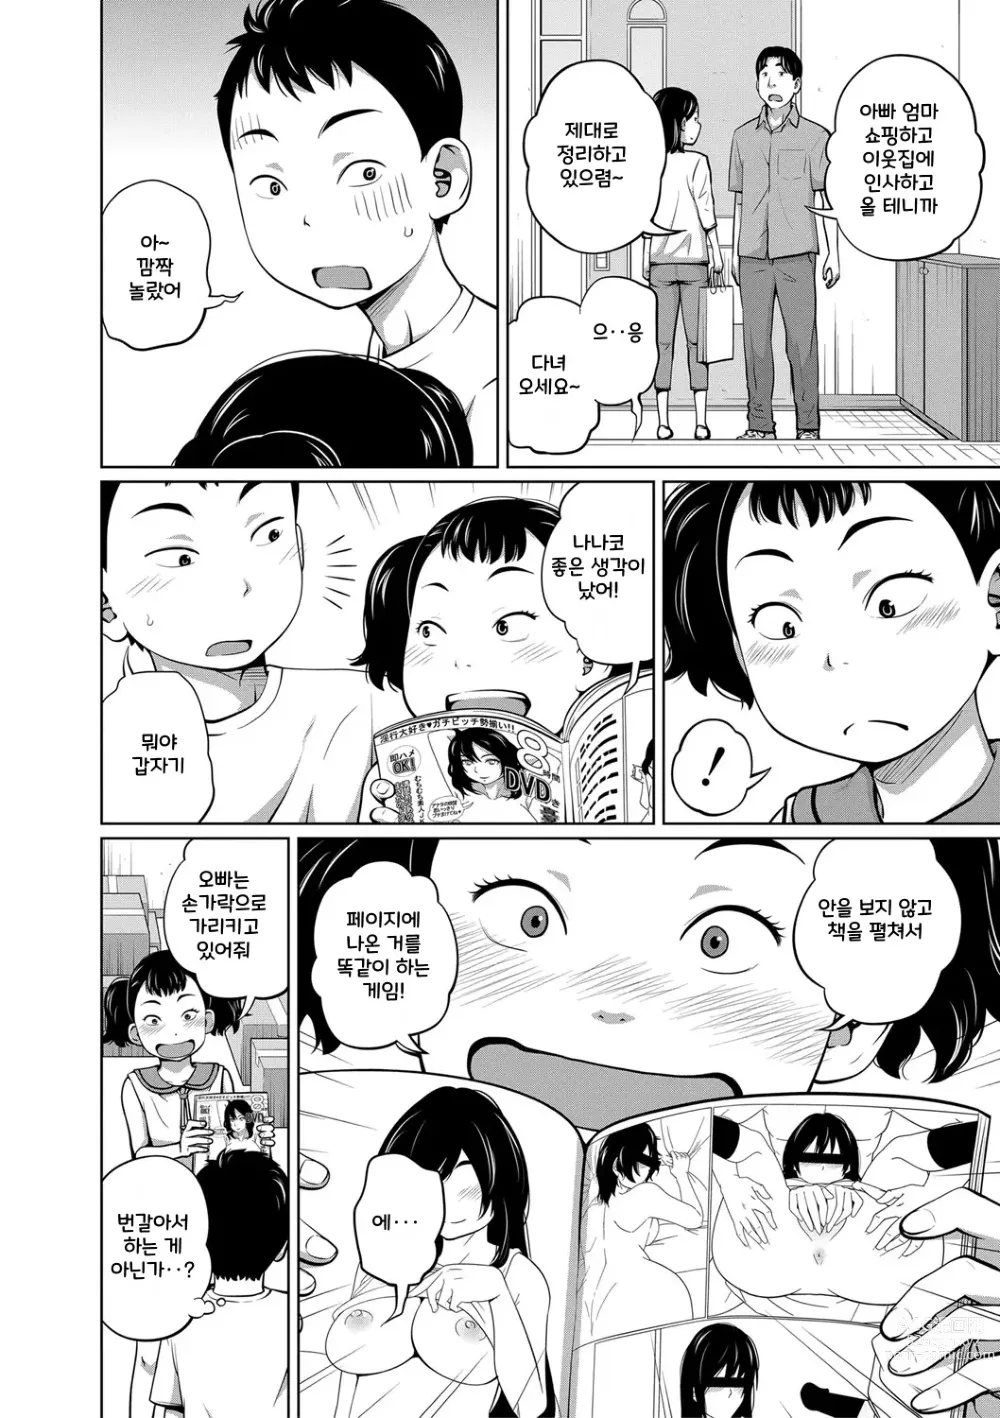 Page 177 of manga Imouto Access - Sister Access